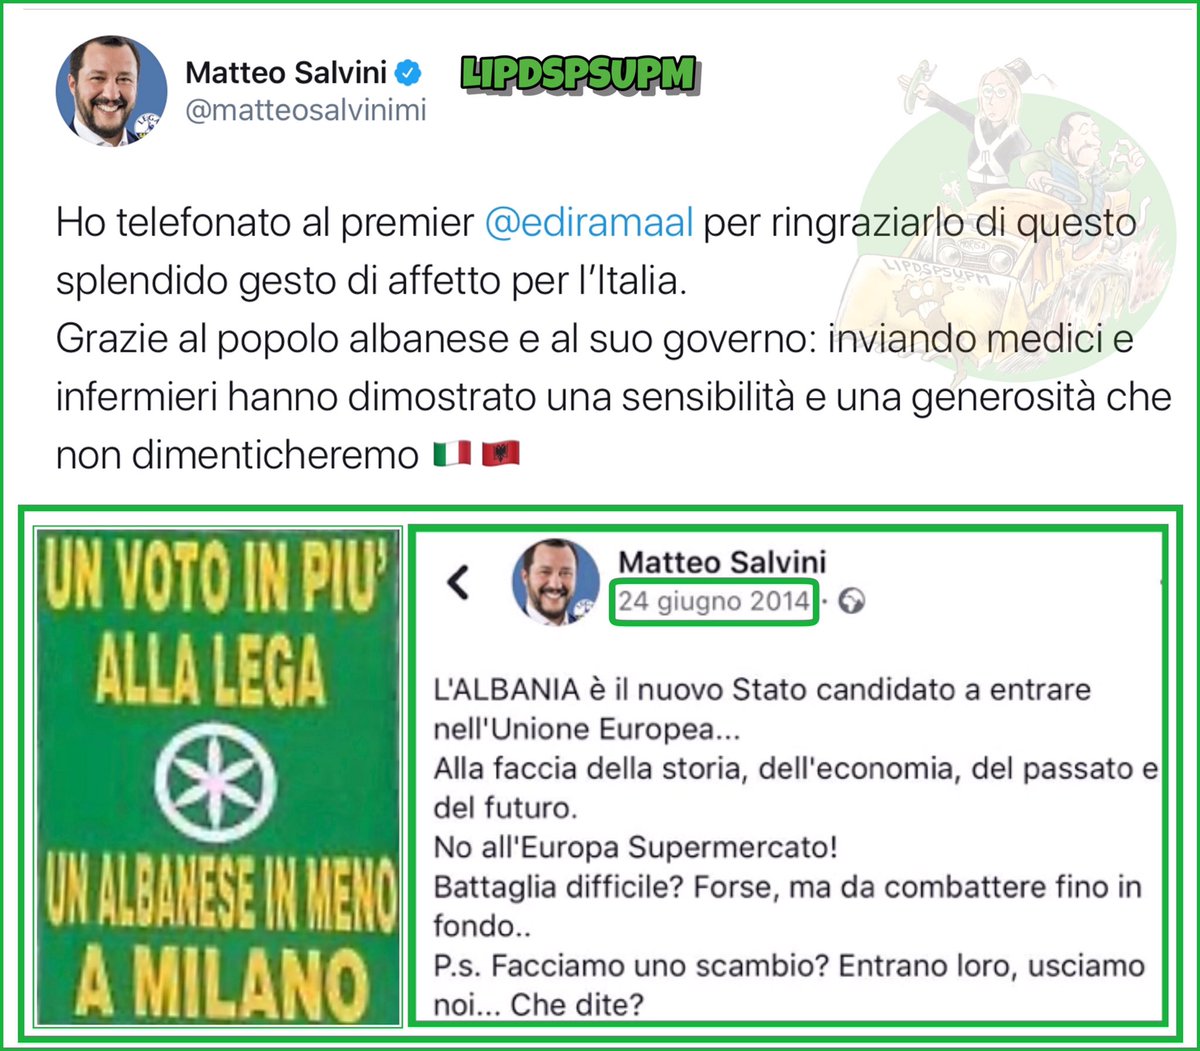 Memoria corta.
#CODVID19 #Salvini #coronavirusitalla